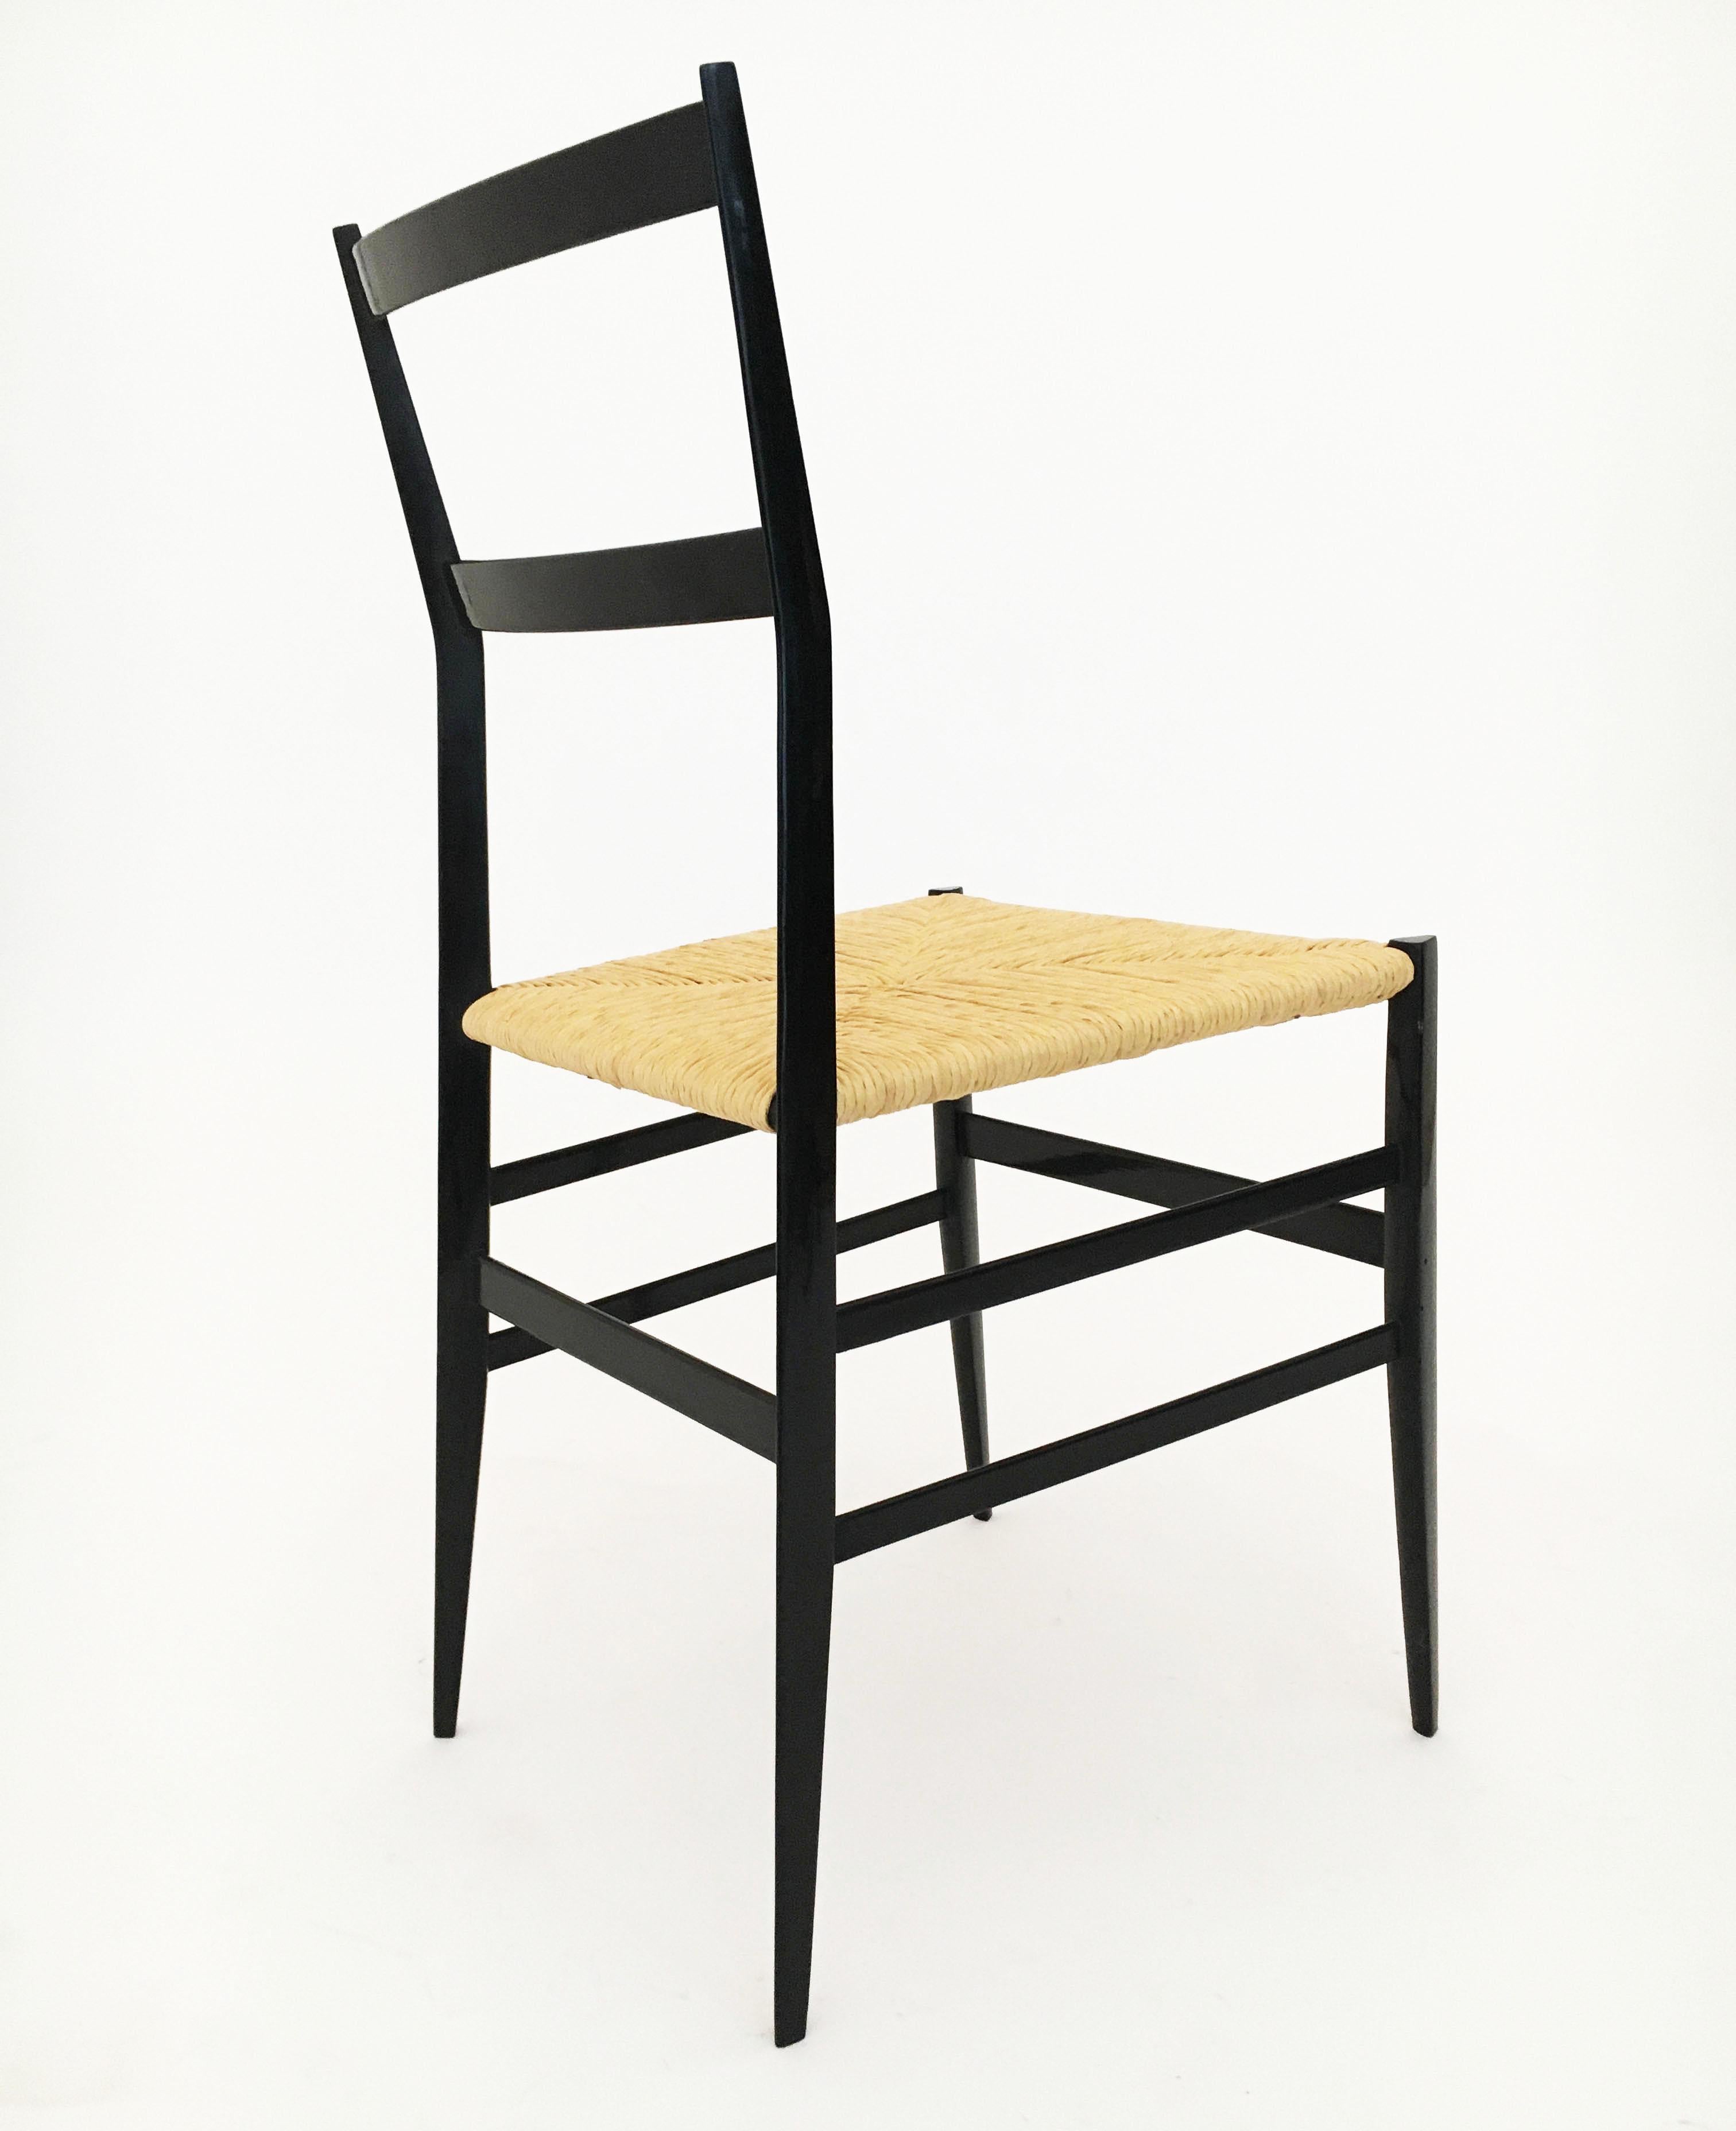 Papercord Gio Ponti Superleggera Chairs Set of Six by Cassina, Italy 1958